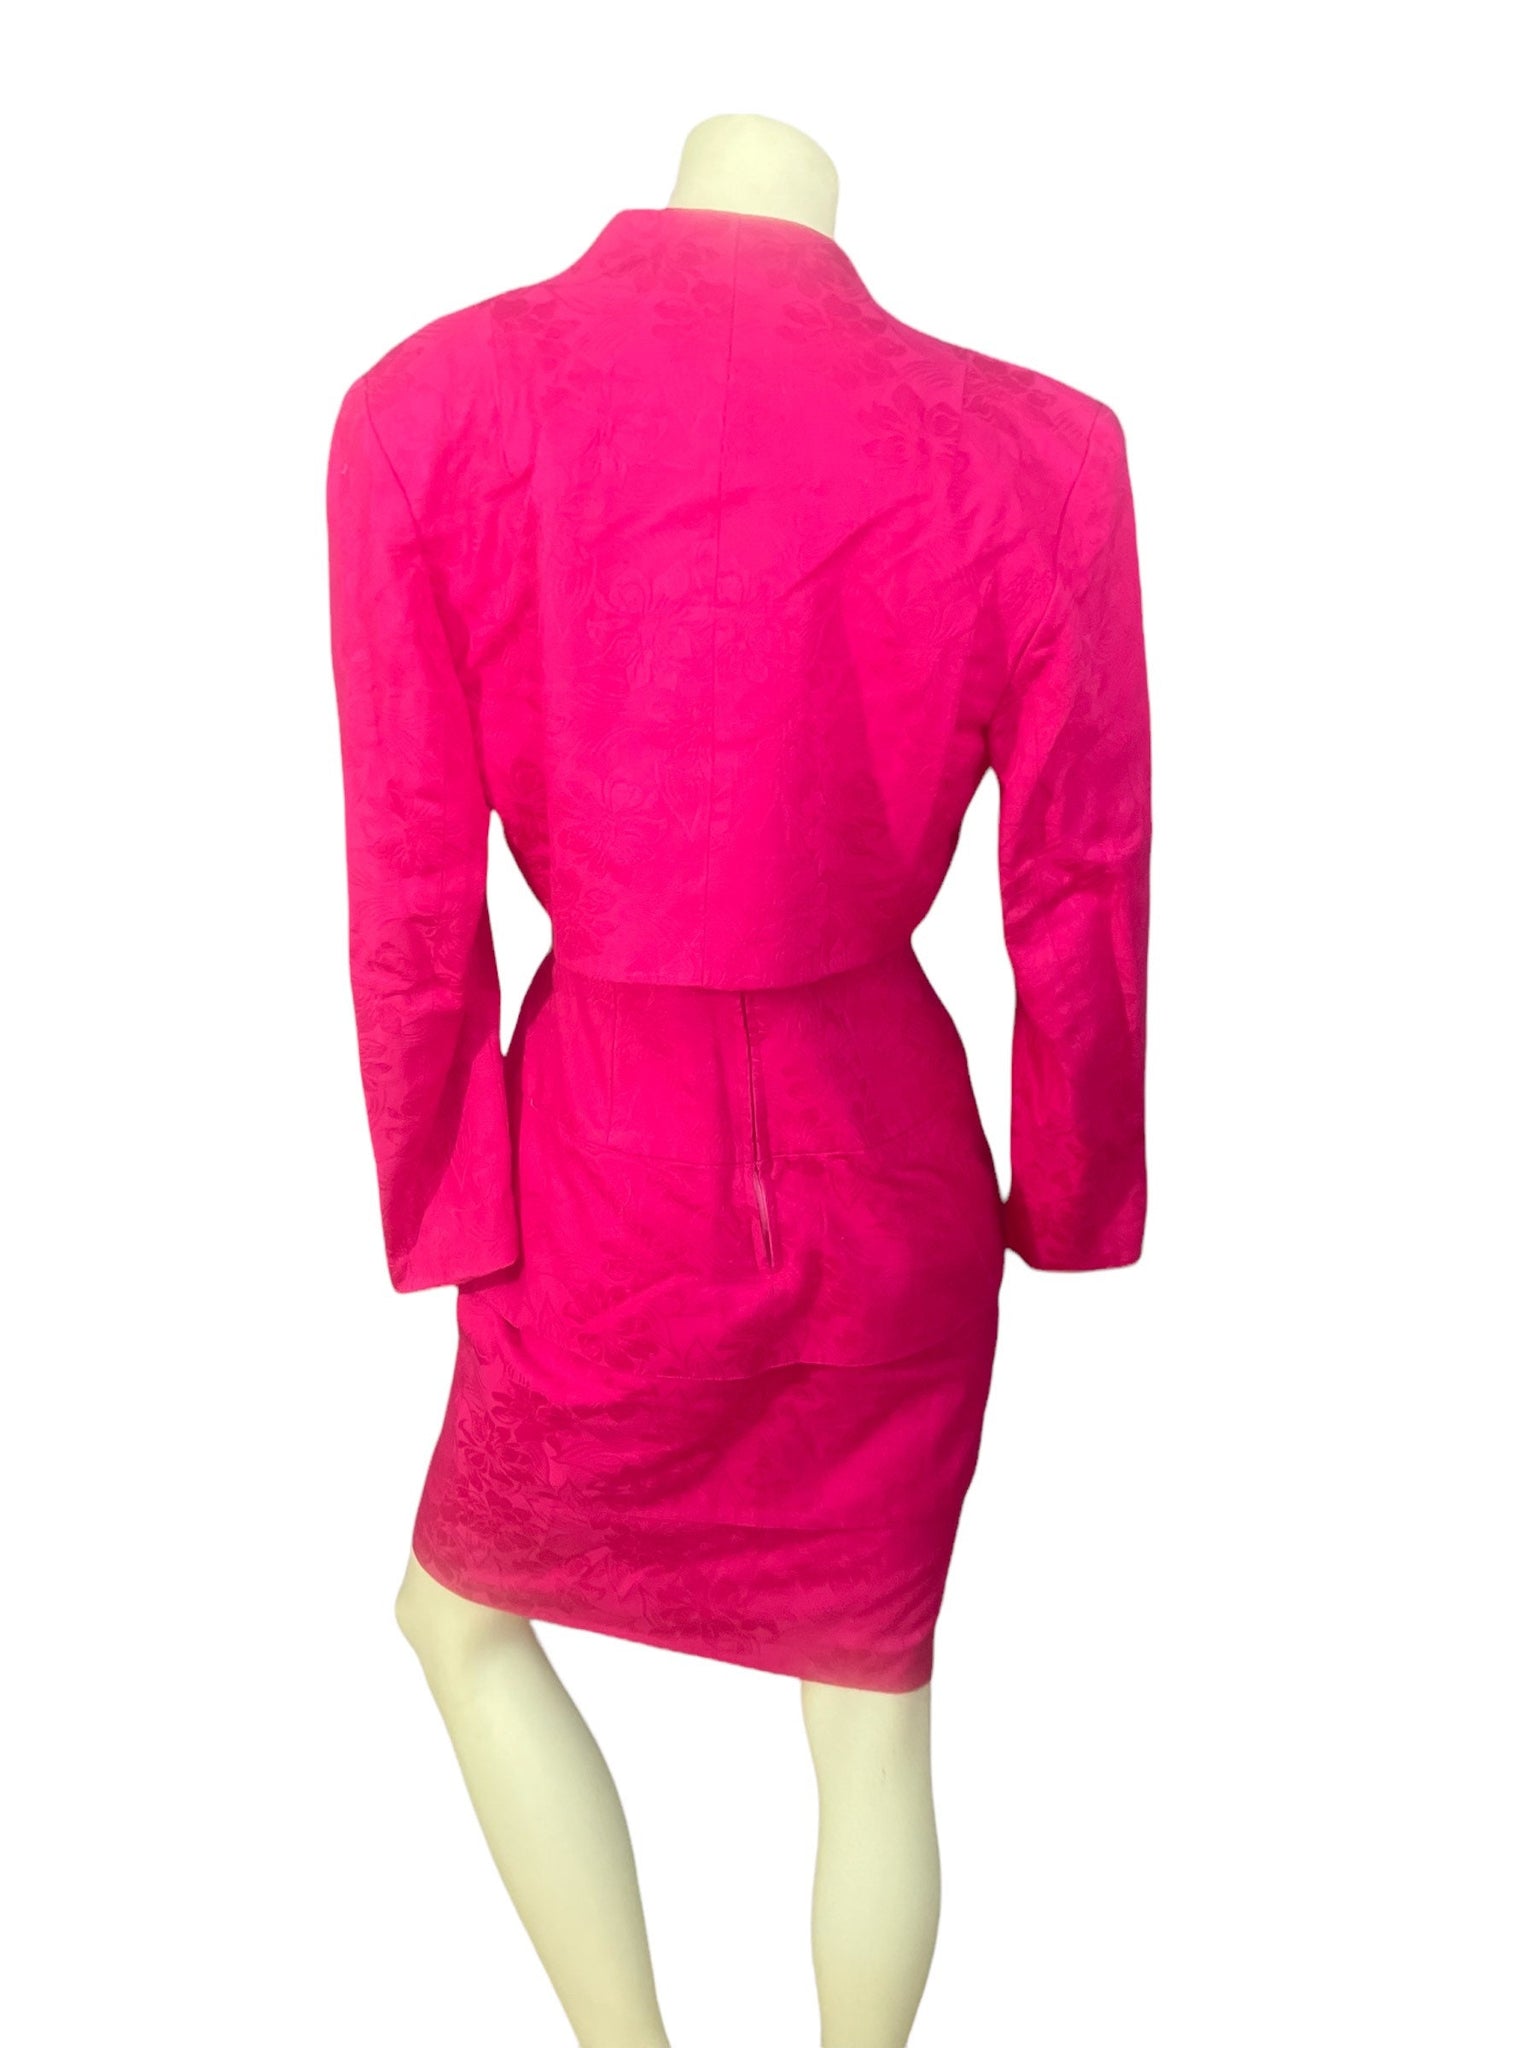 Vintage 80's AJ Bari strapless party dress 8 hot pink